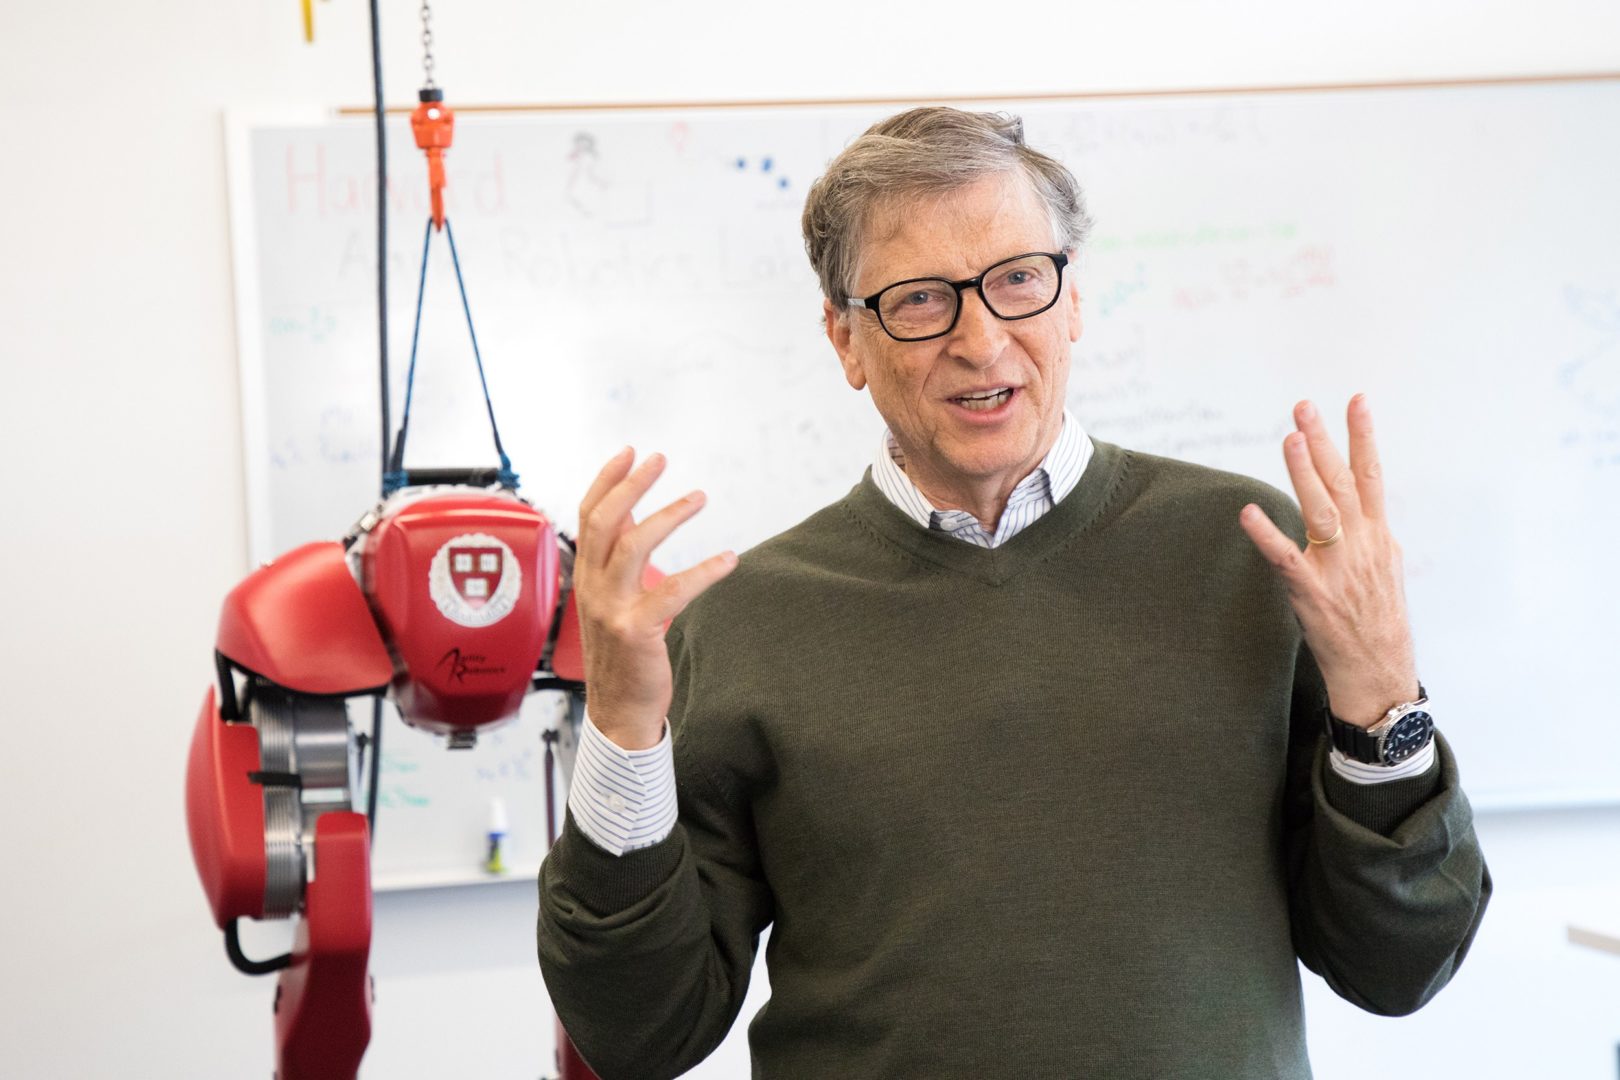 El Reloj de Bill Gates ...  STW-Bill-Gates-Casio-Diver-2-1620x1080